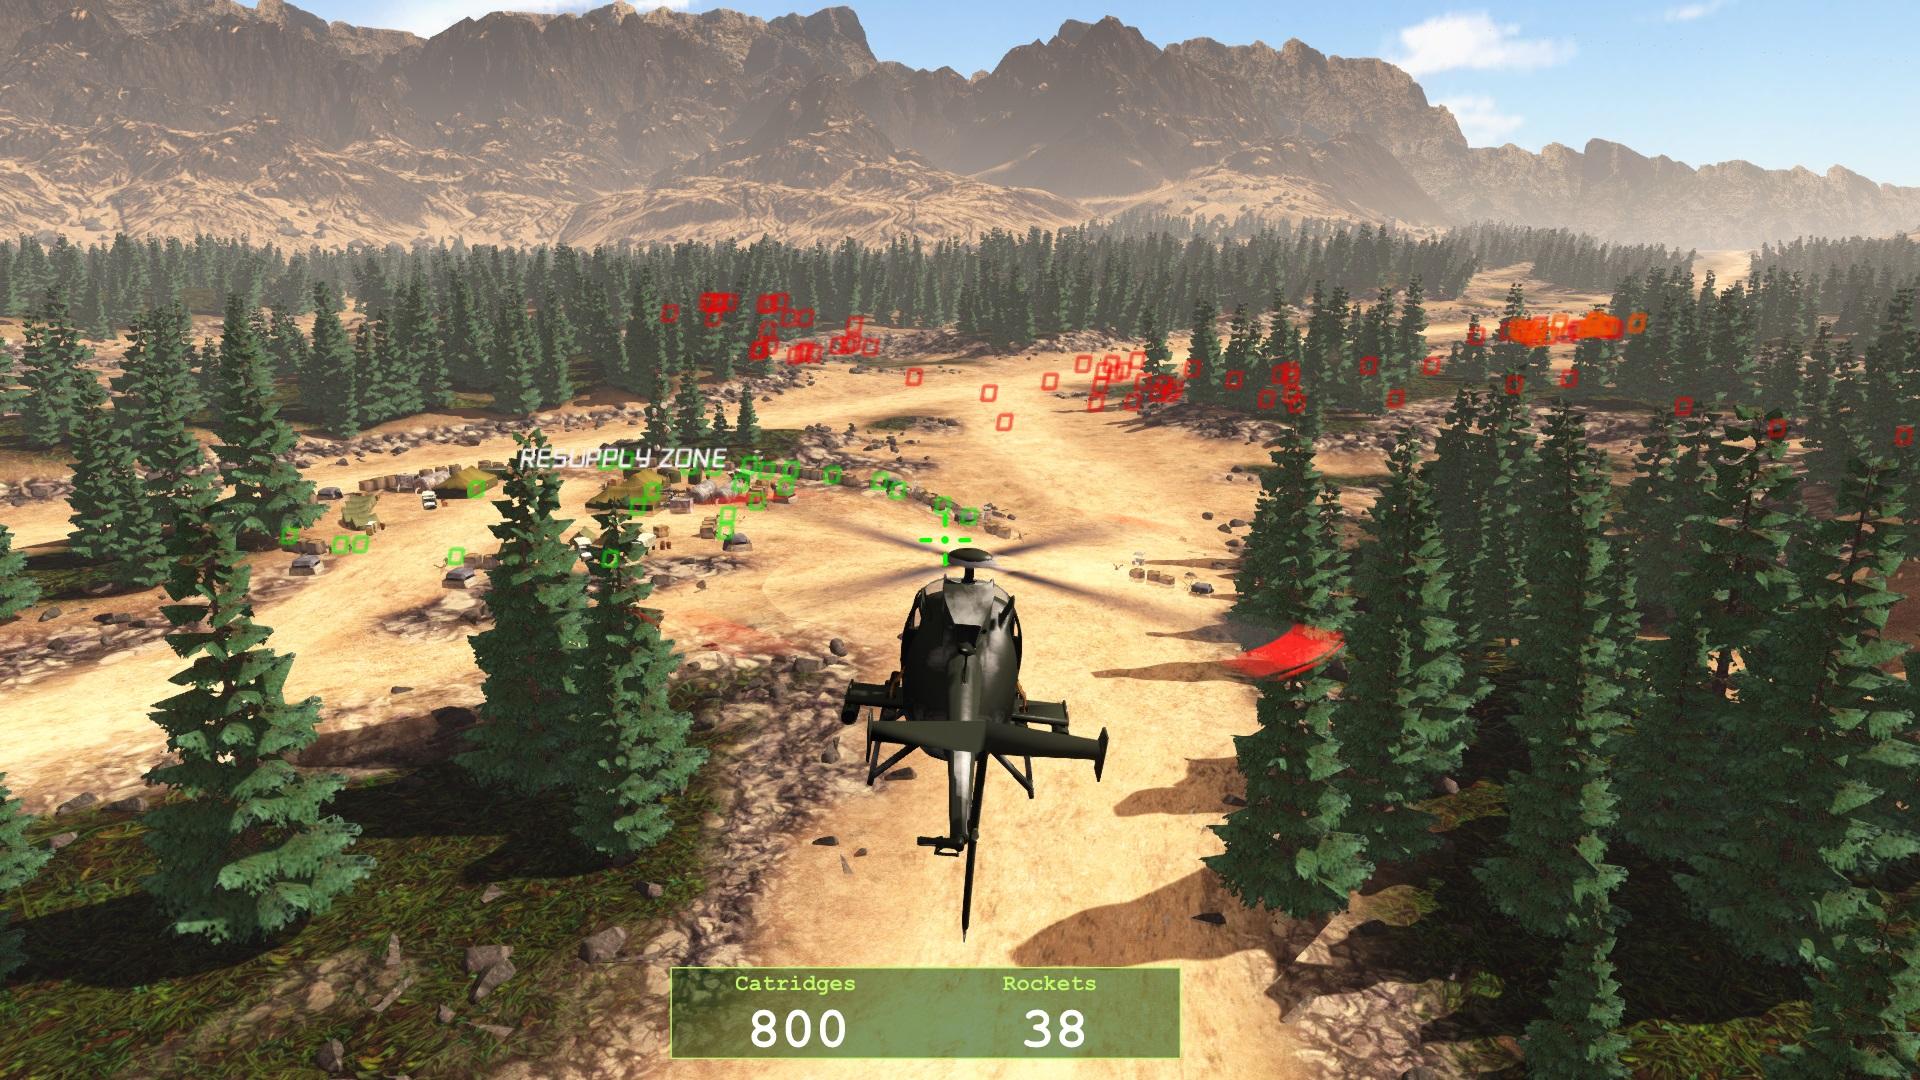 Screenshot №1 from game Aerial Destruction